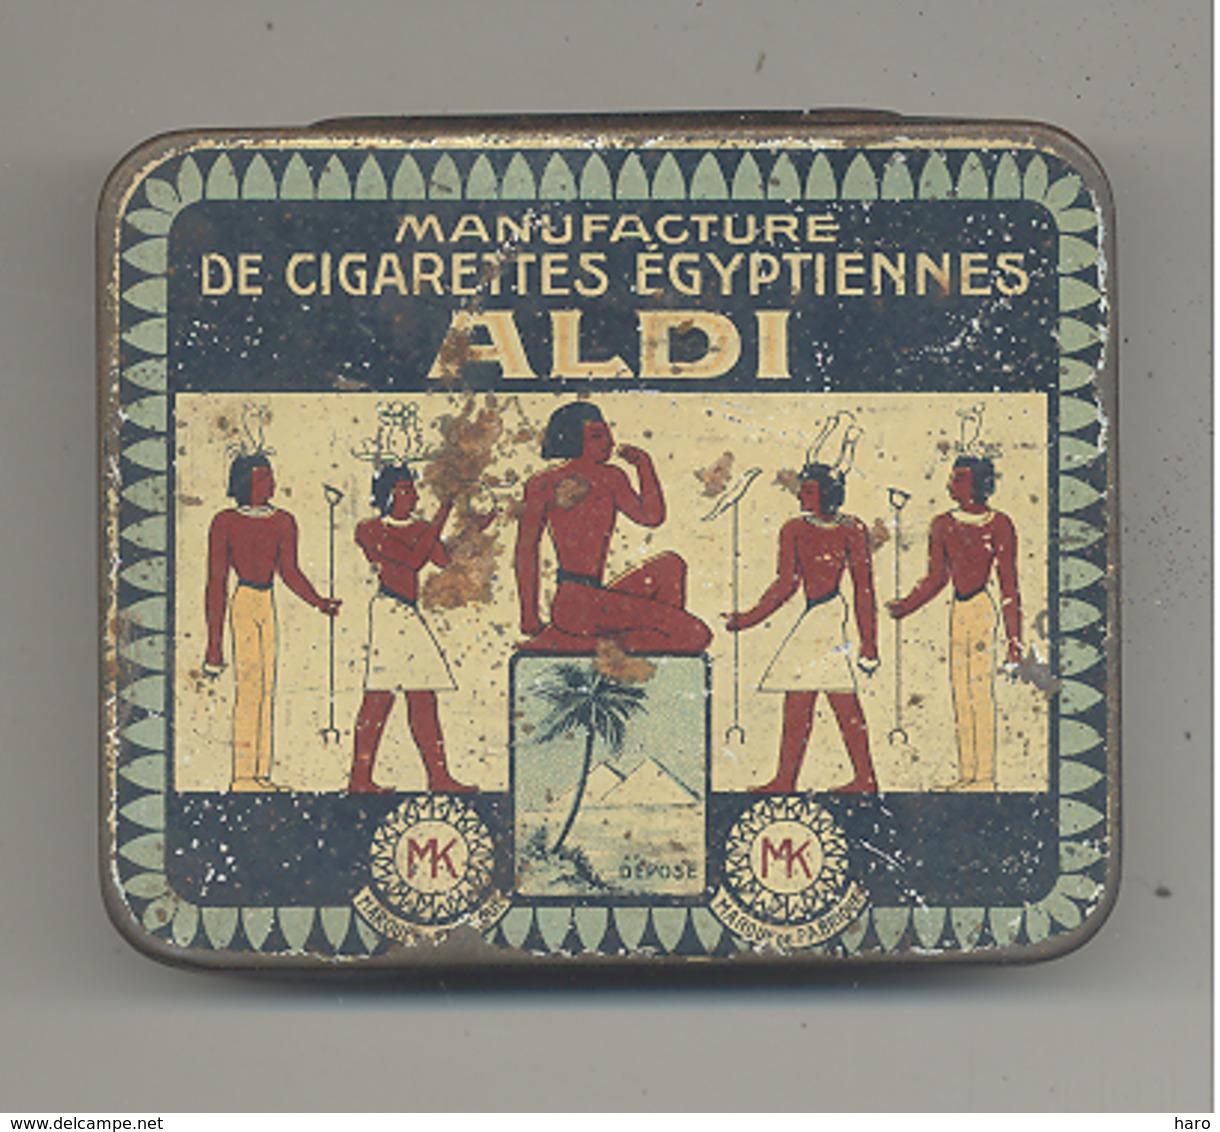 Boîte De Cigarettes Métallique ( VIDE) "ALDI" Manufacture De Cigarettes égyptiennes - Estuches Para Cigarrillos (vacios)